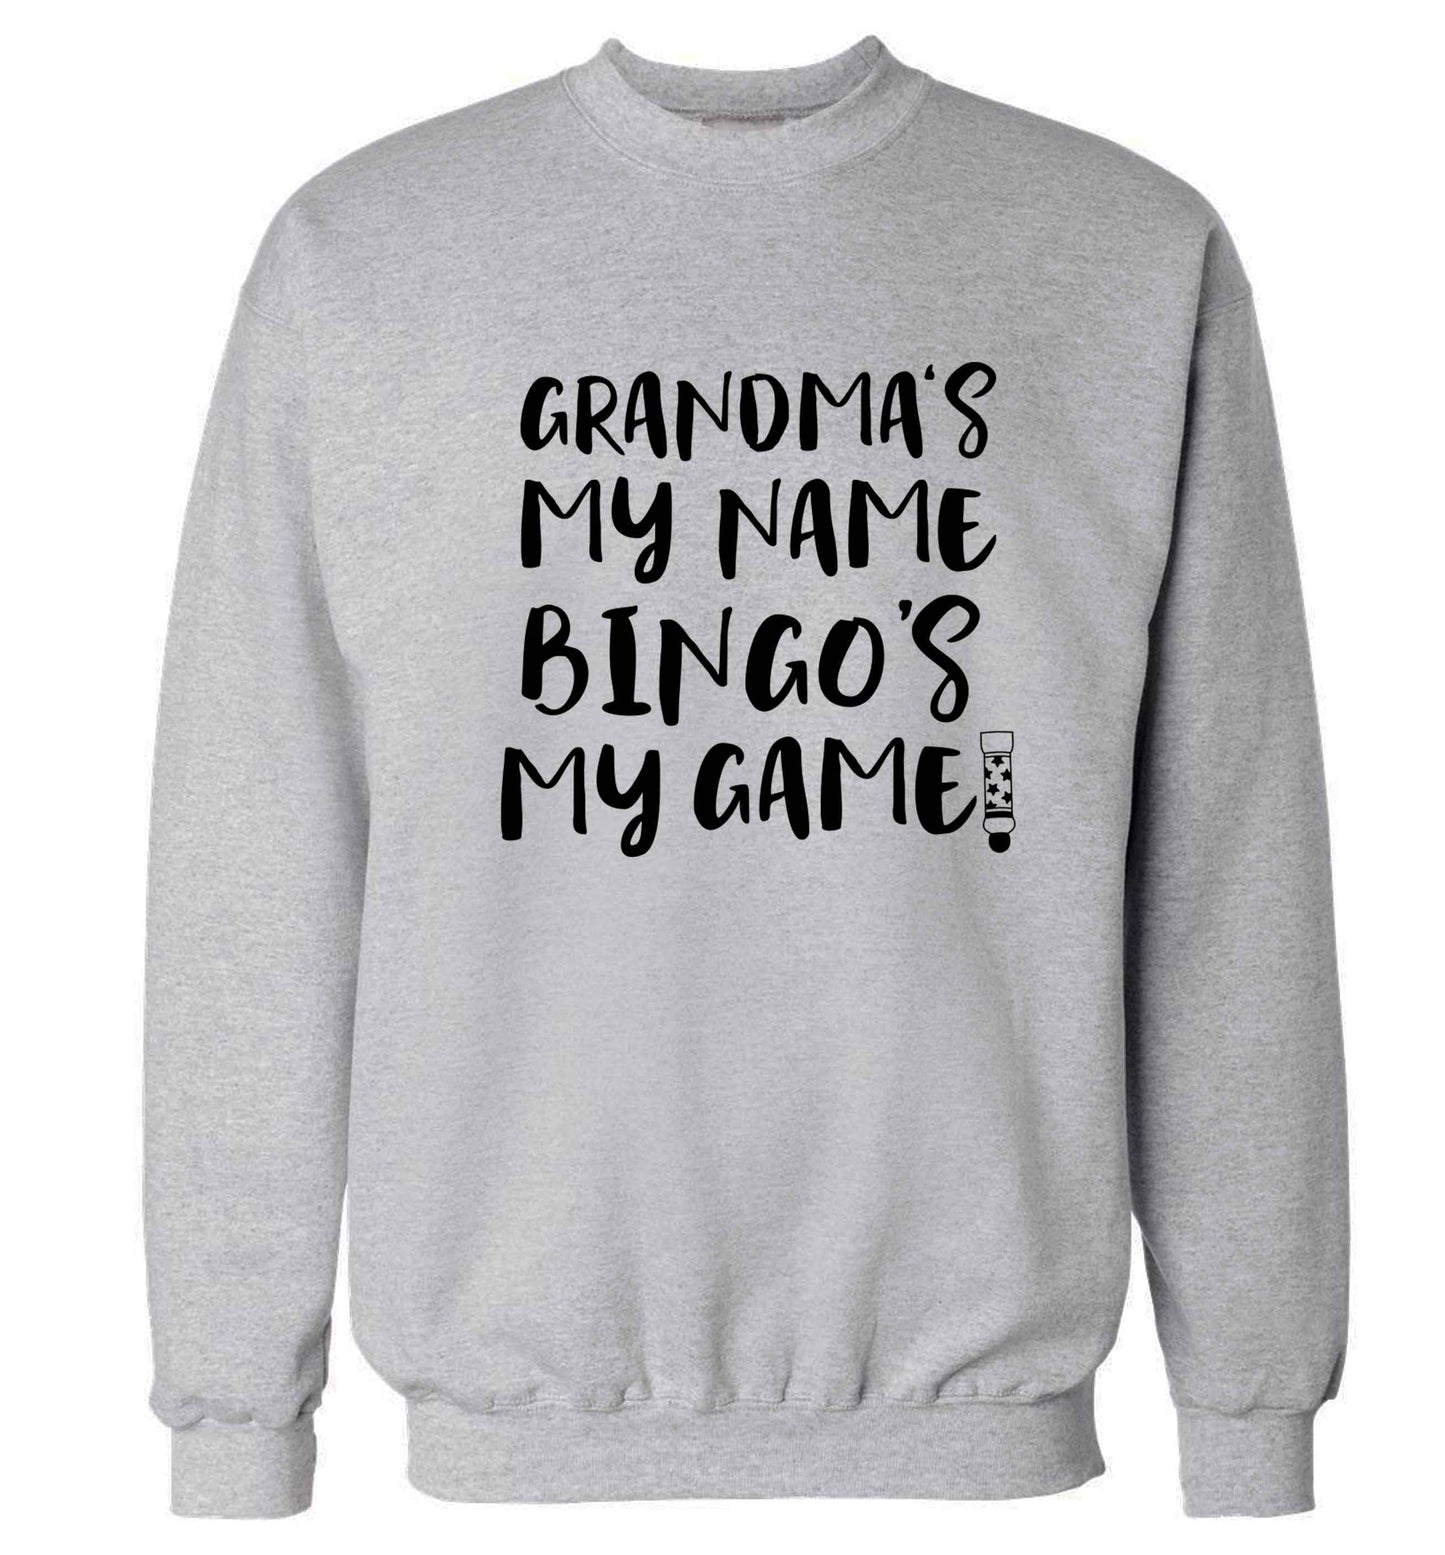 Grandma's my name bingo's my game! Adult's unisex grey Sweater 2XL